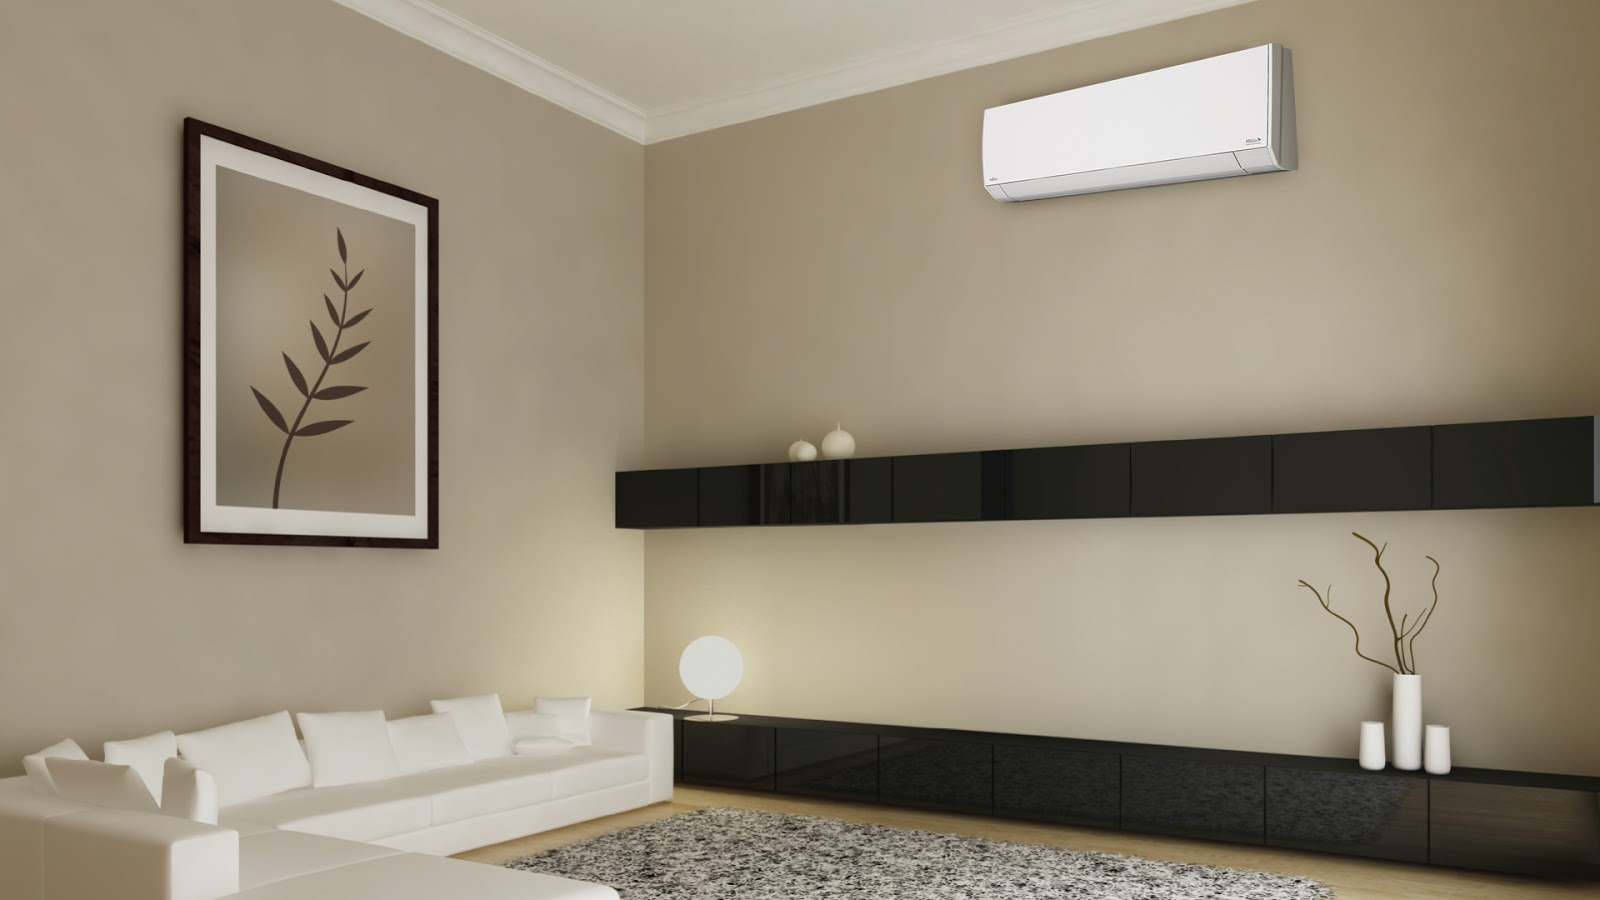 fujitsu air conditioner maintaining clean air